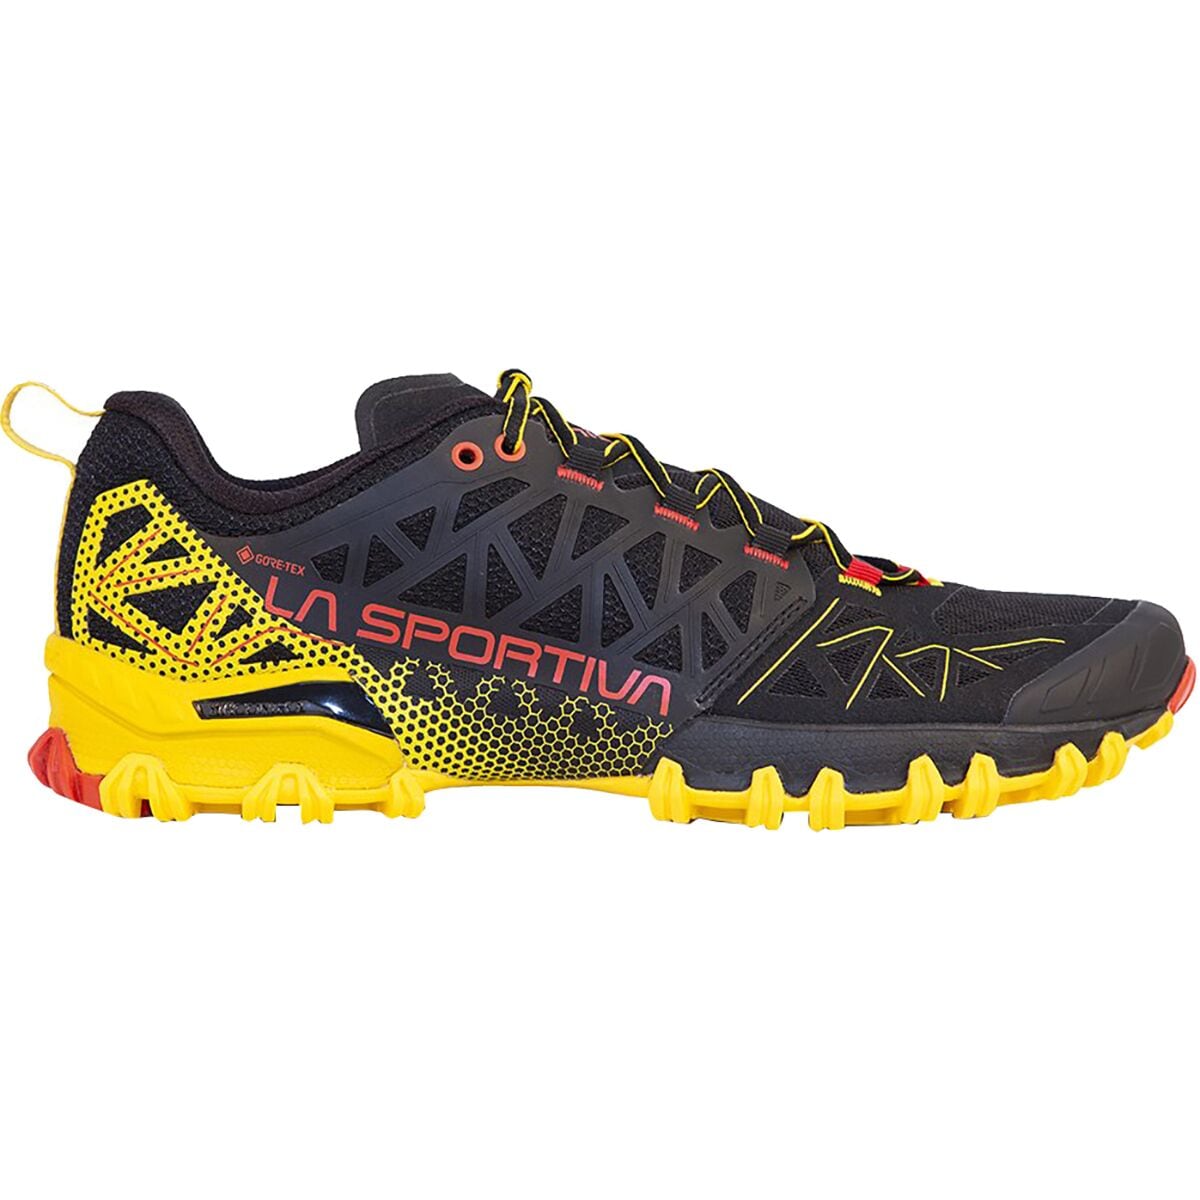 La Sportiva Bushido II GTX Trail Running Shoe - Men's